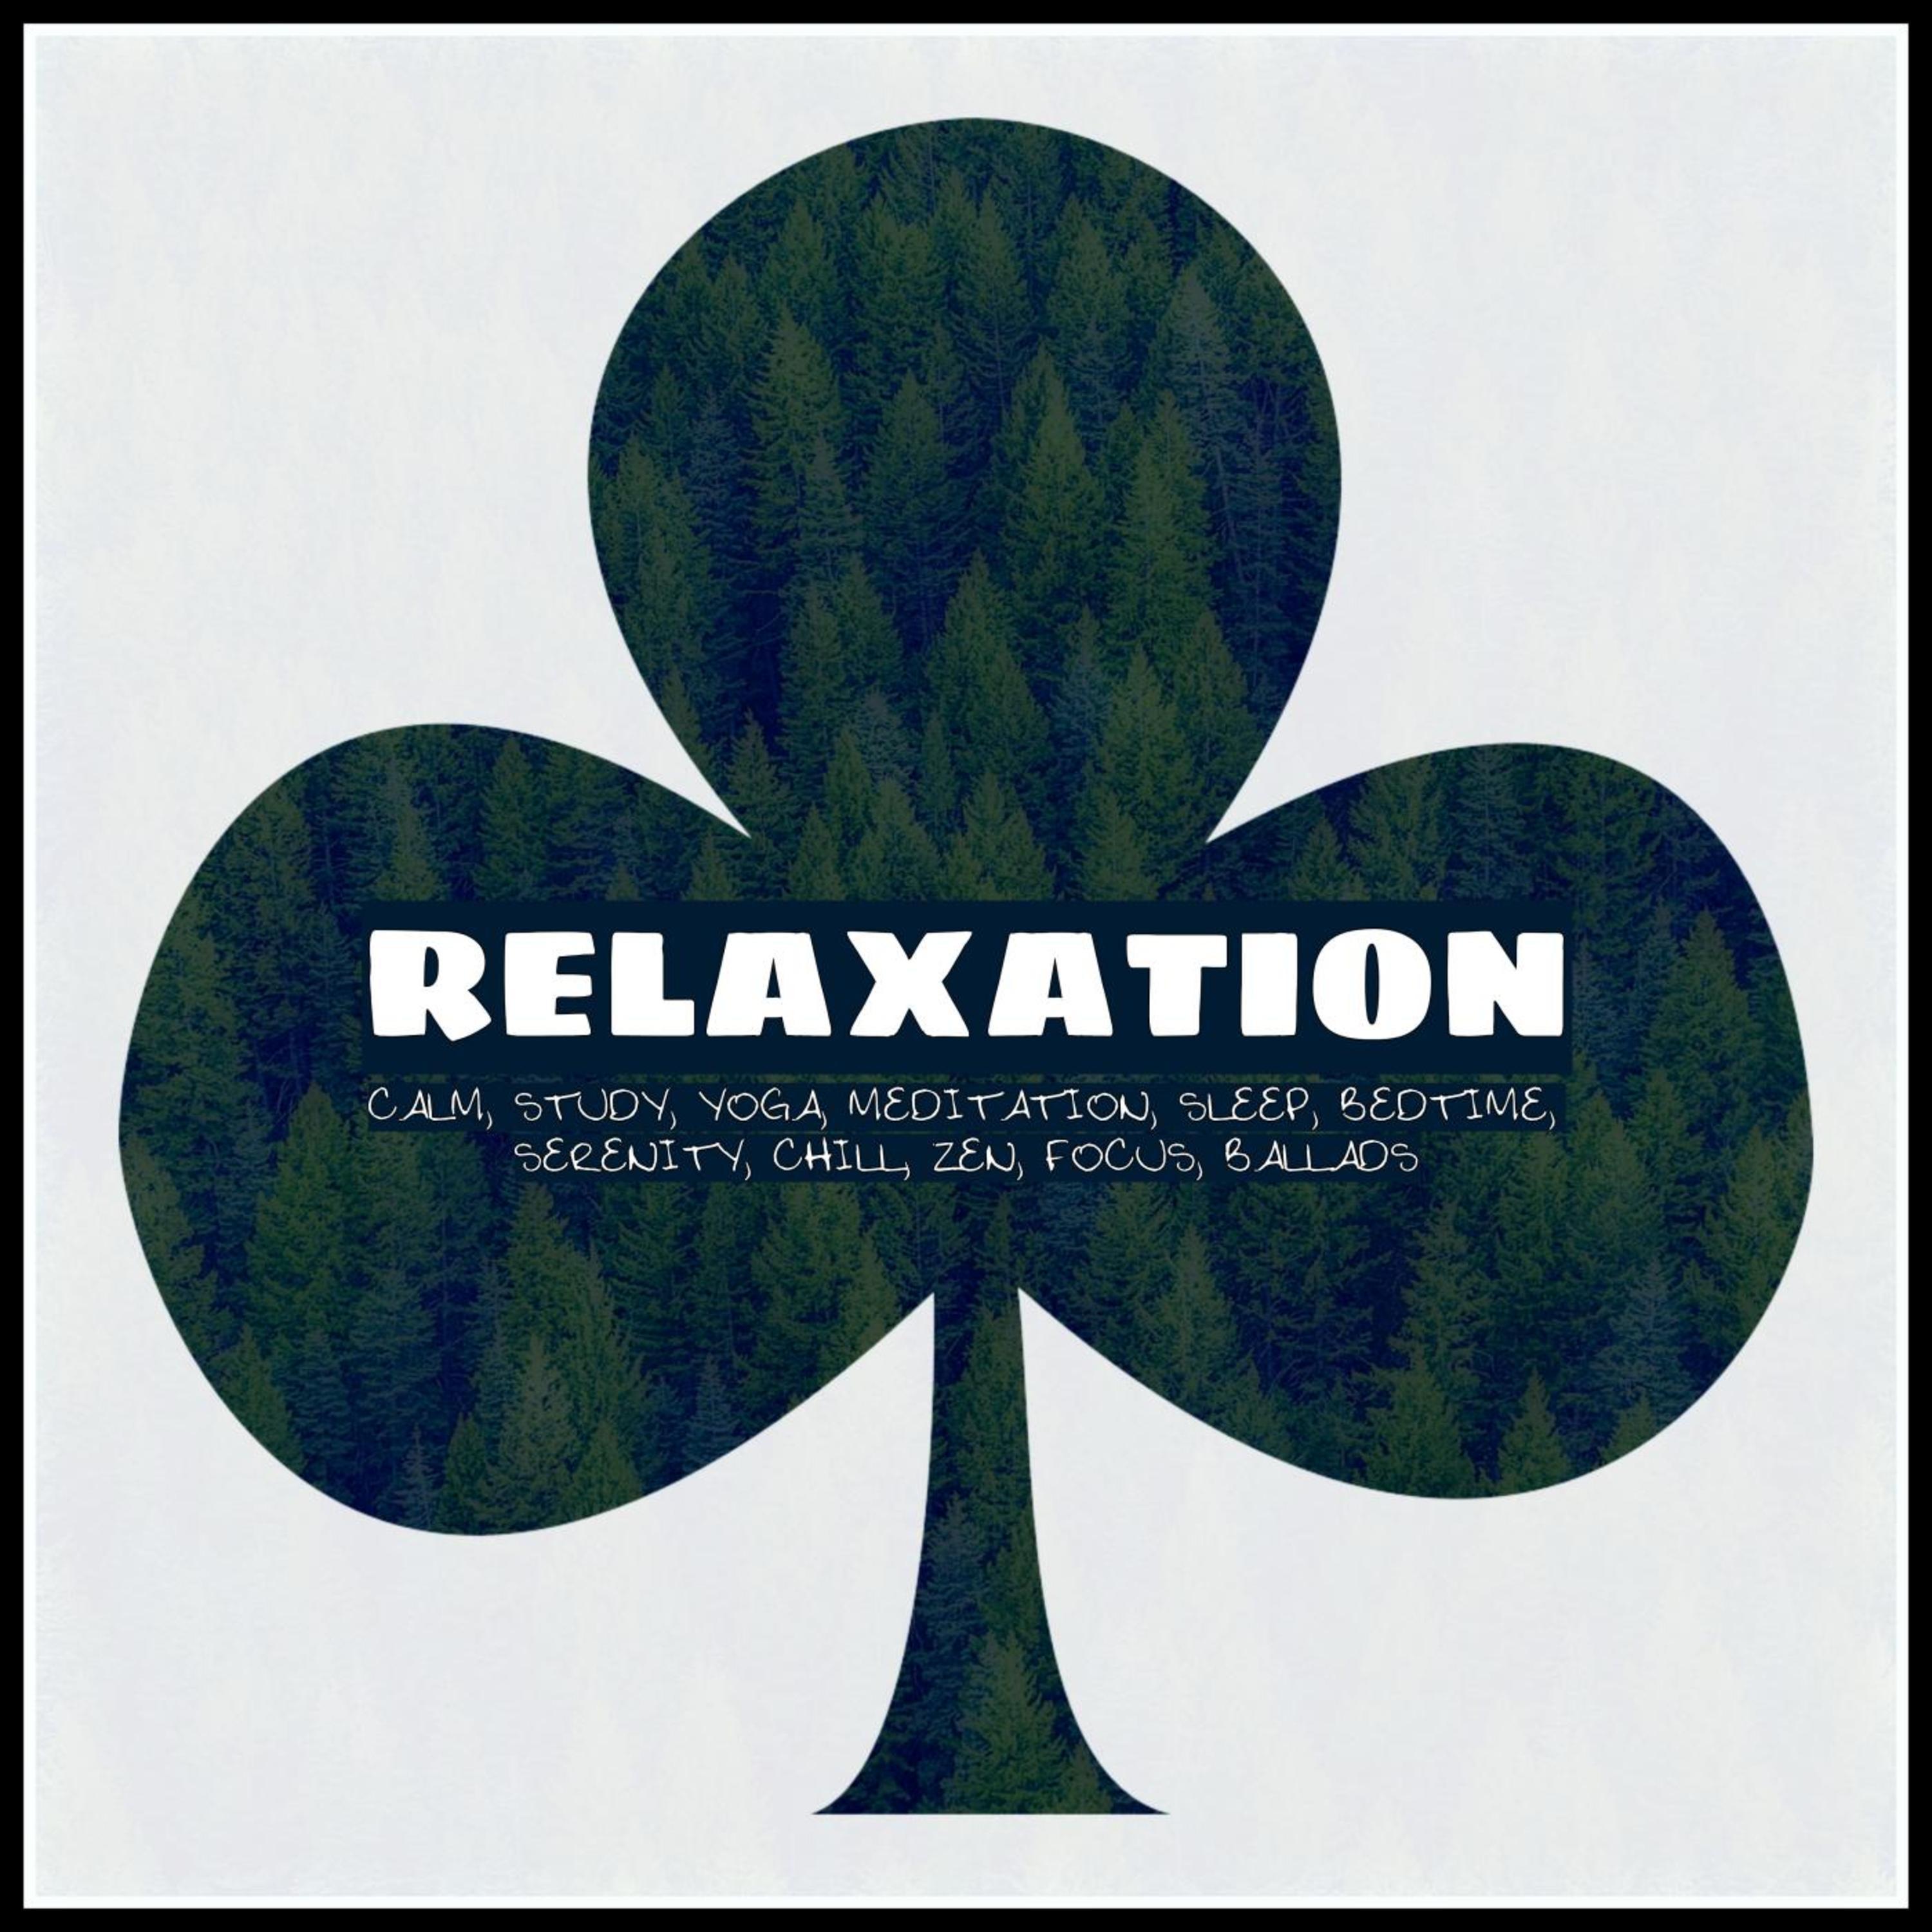 Relaxation: Calm, Study, Yoga, Meditation, Sleep, Bedtime, Serenity, Chill, Zen, Focus, Ballads